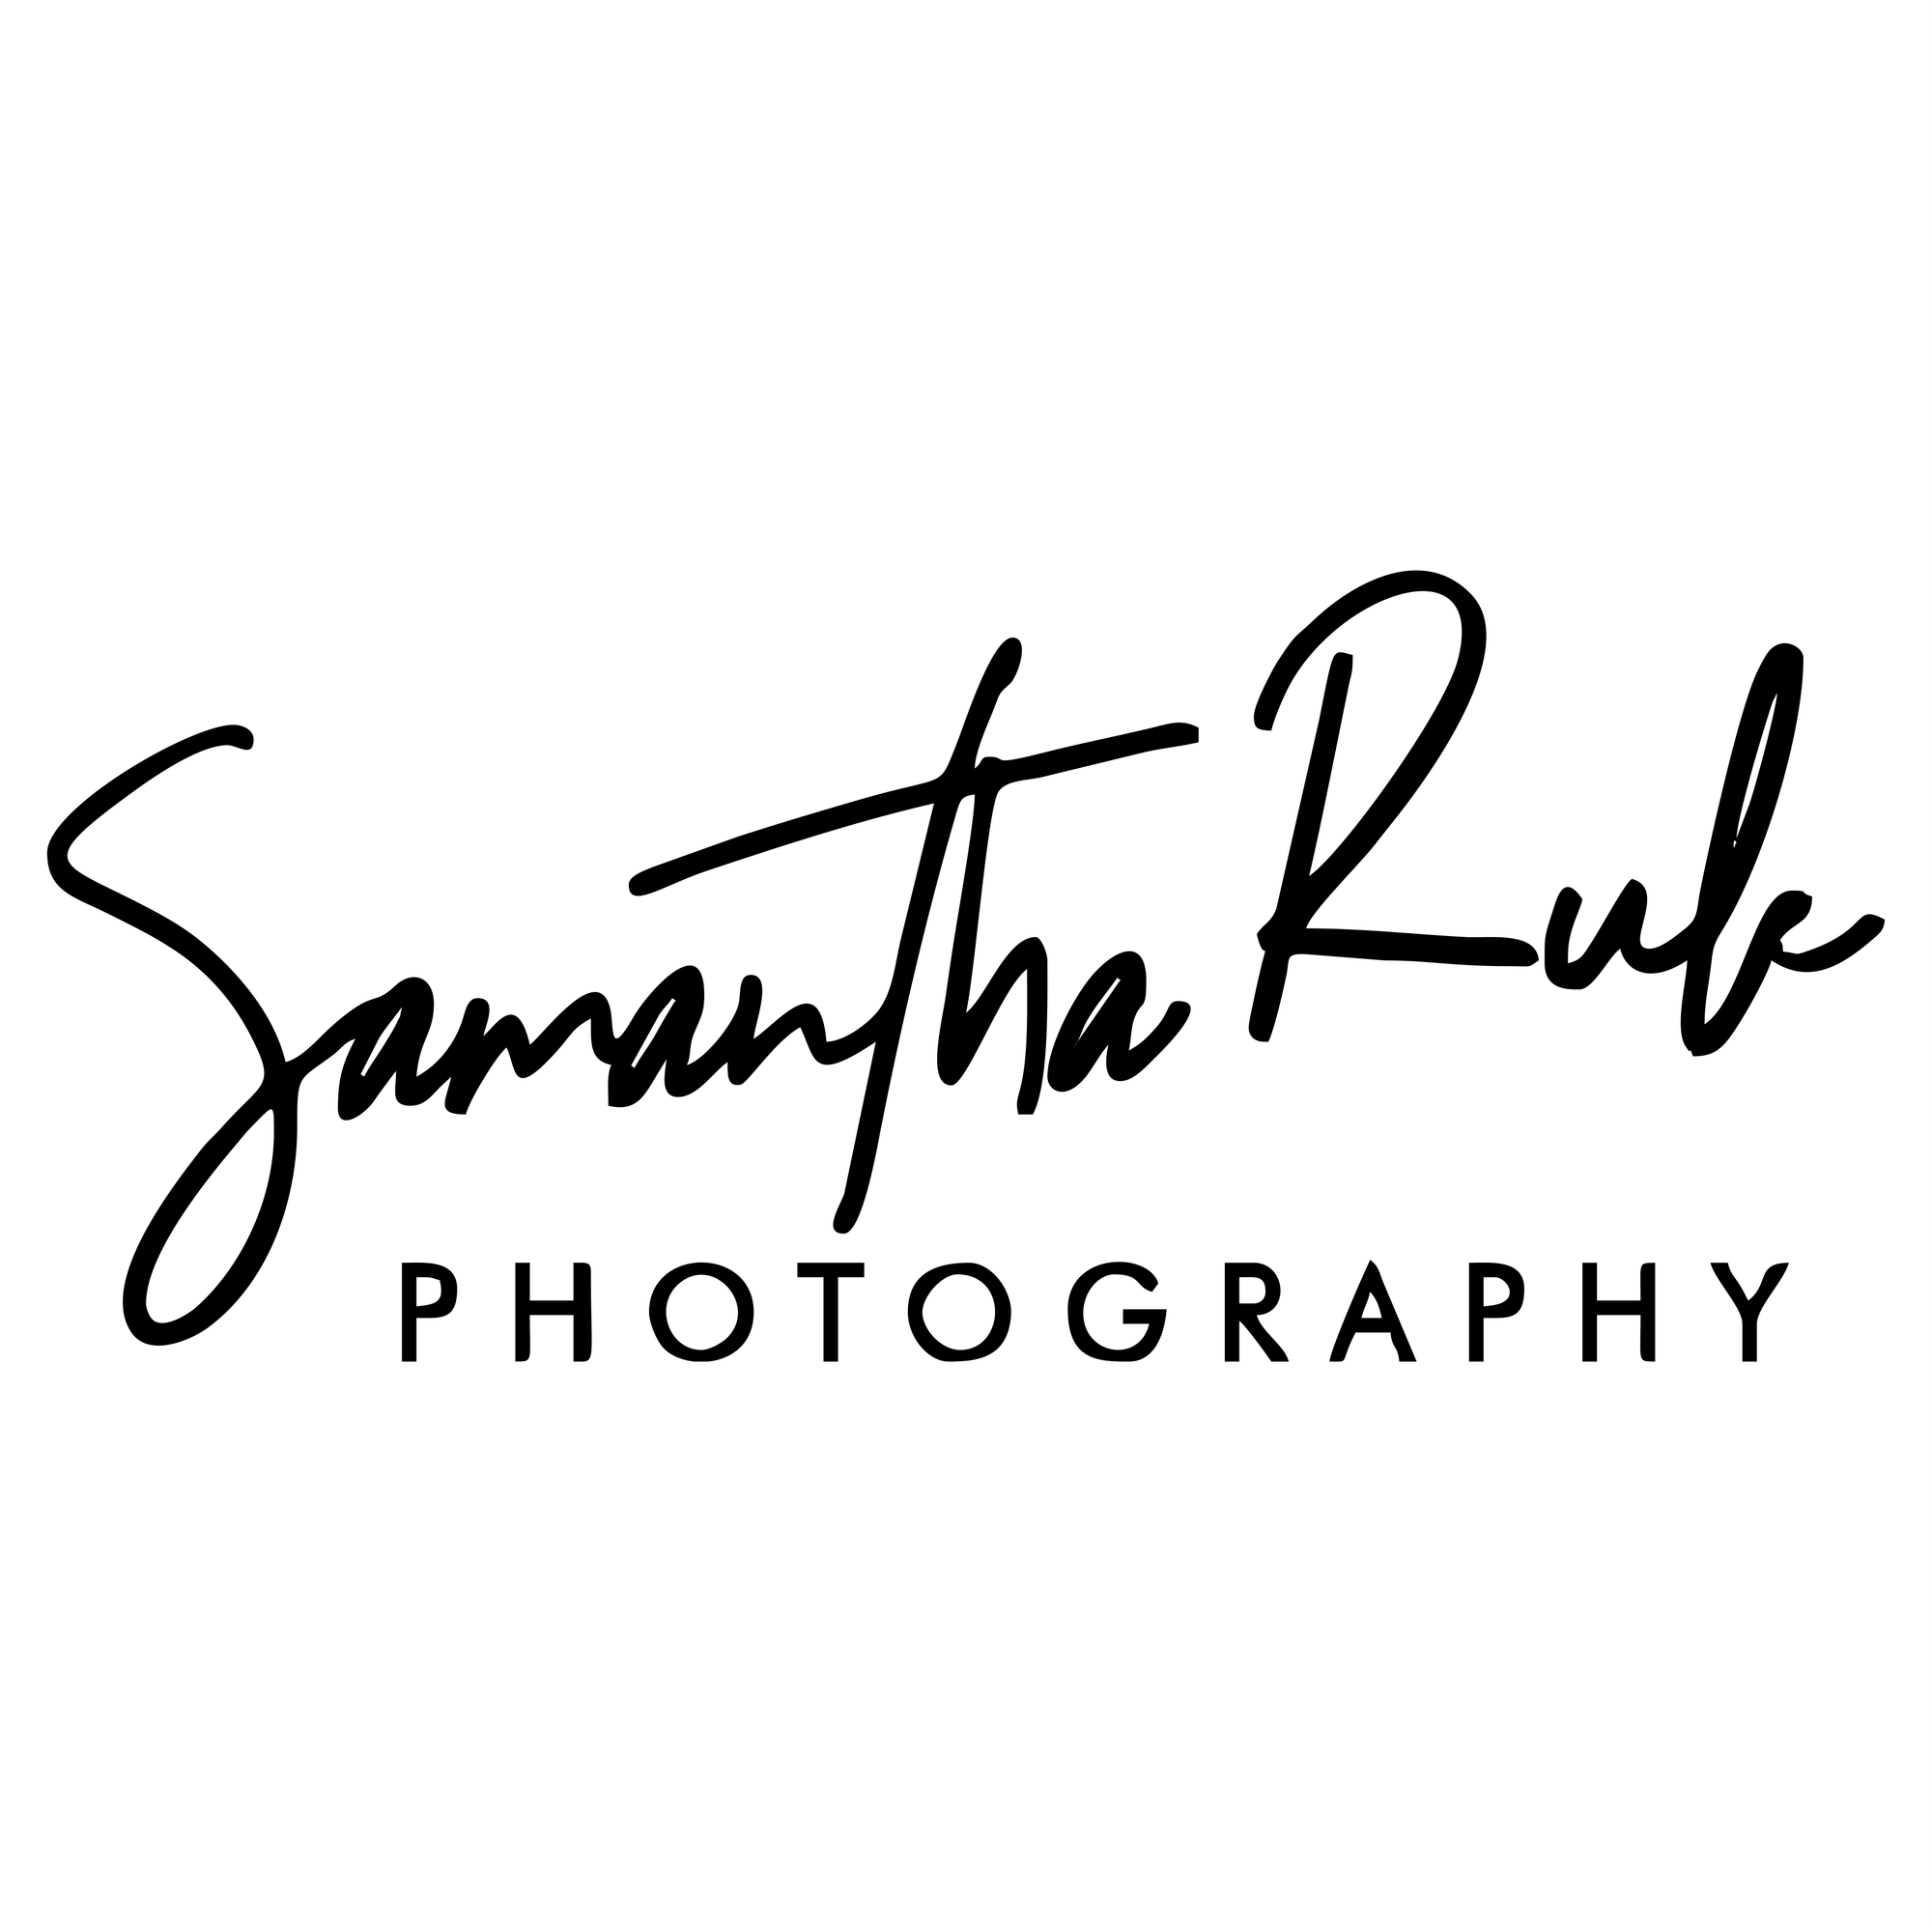 Samantha Rule Photography